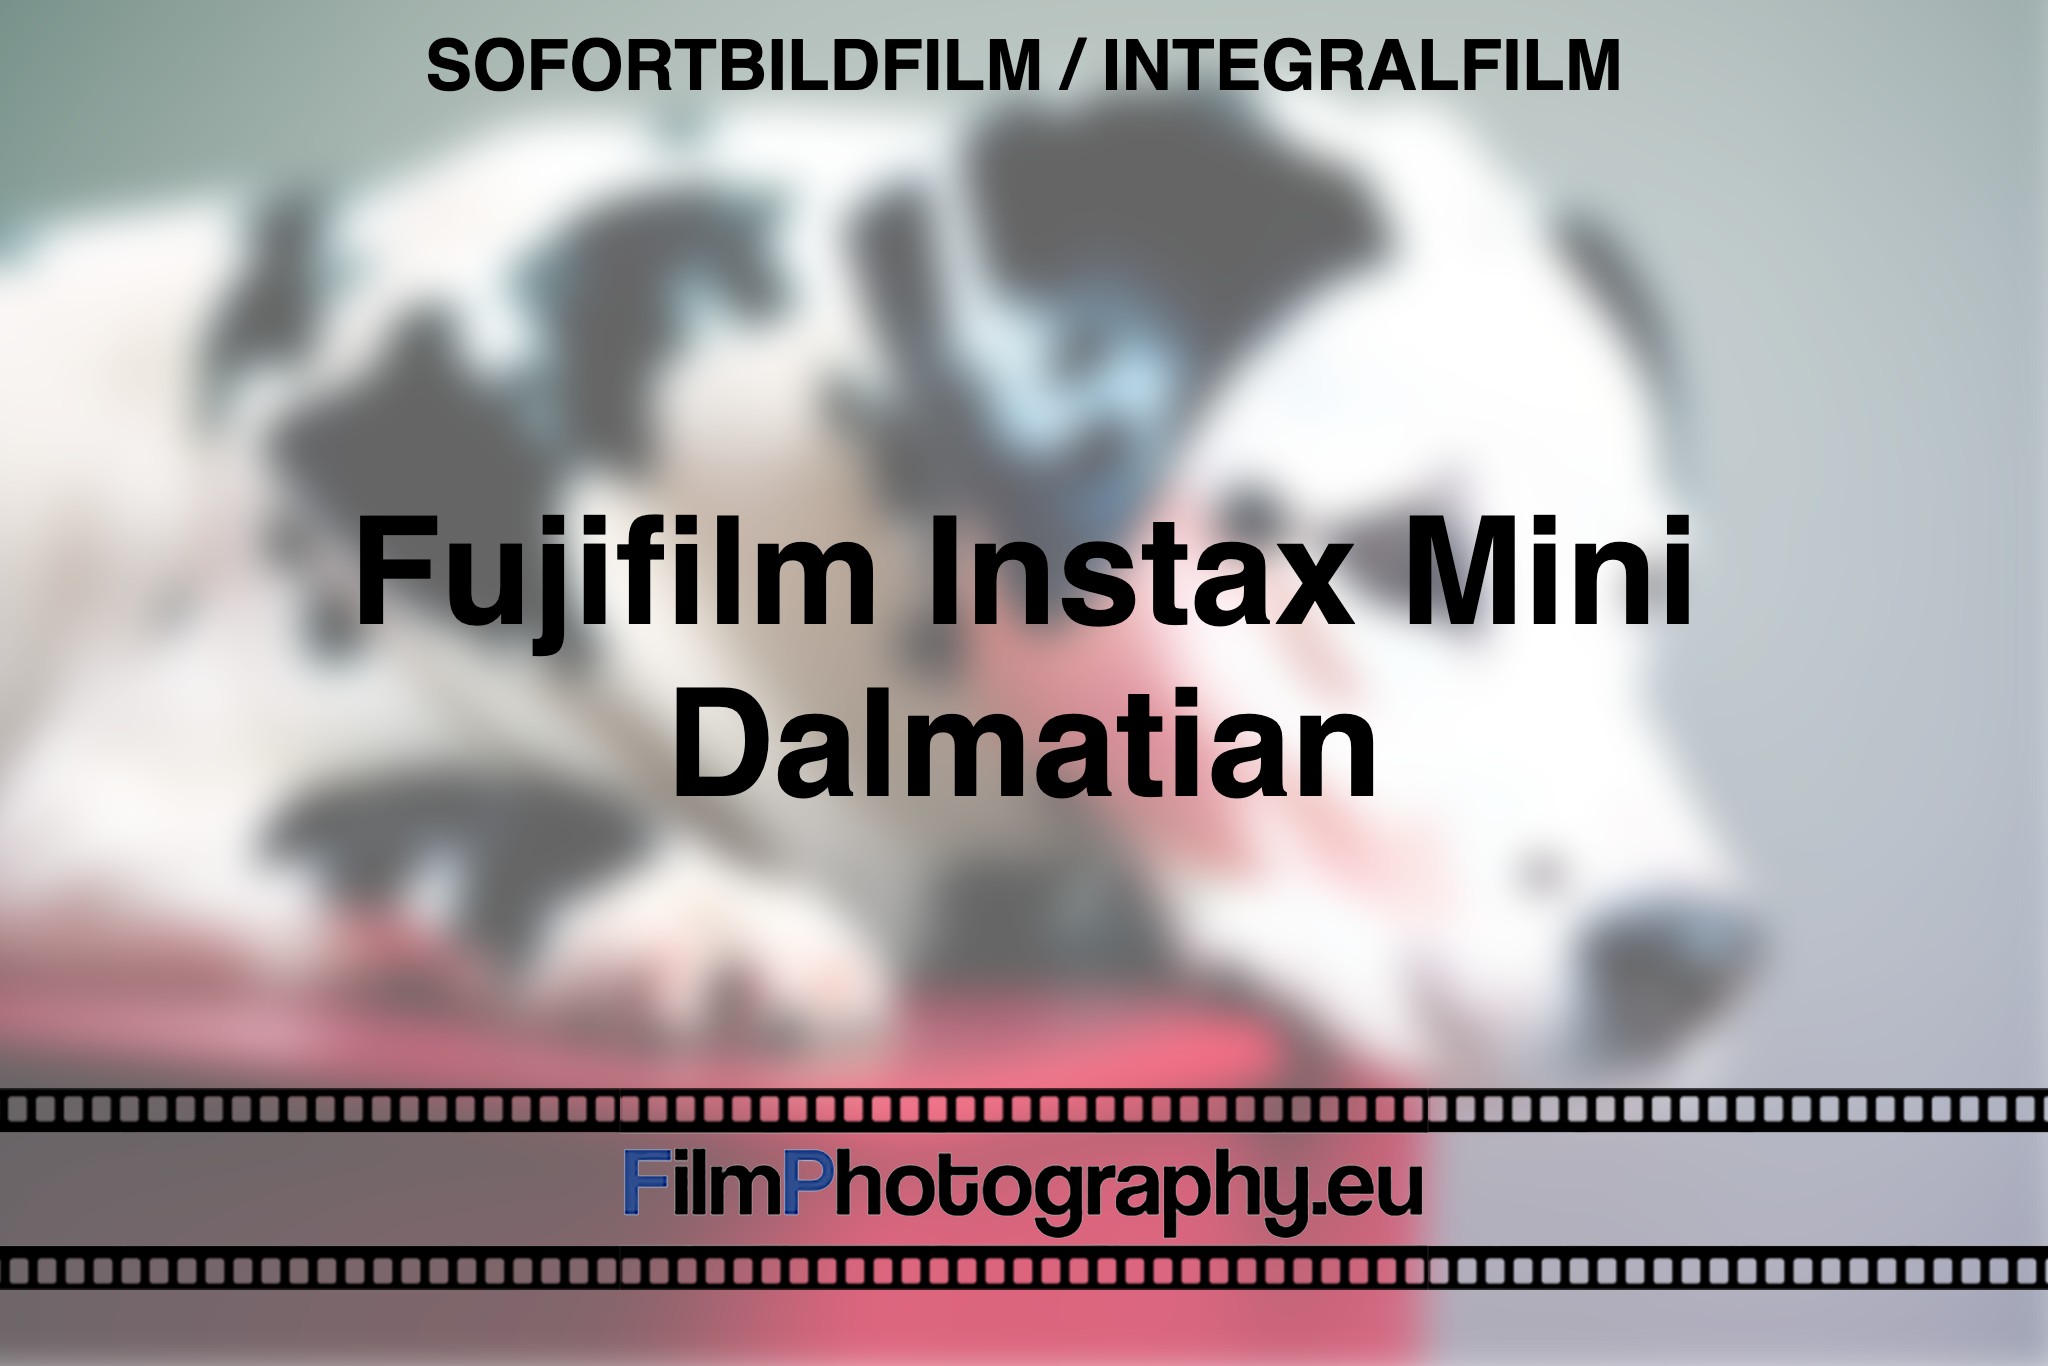 fujifilm-instax-mini-dalmatian-sofortbildfilm-integralfilm-fp-bnv